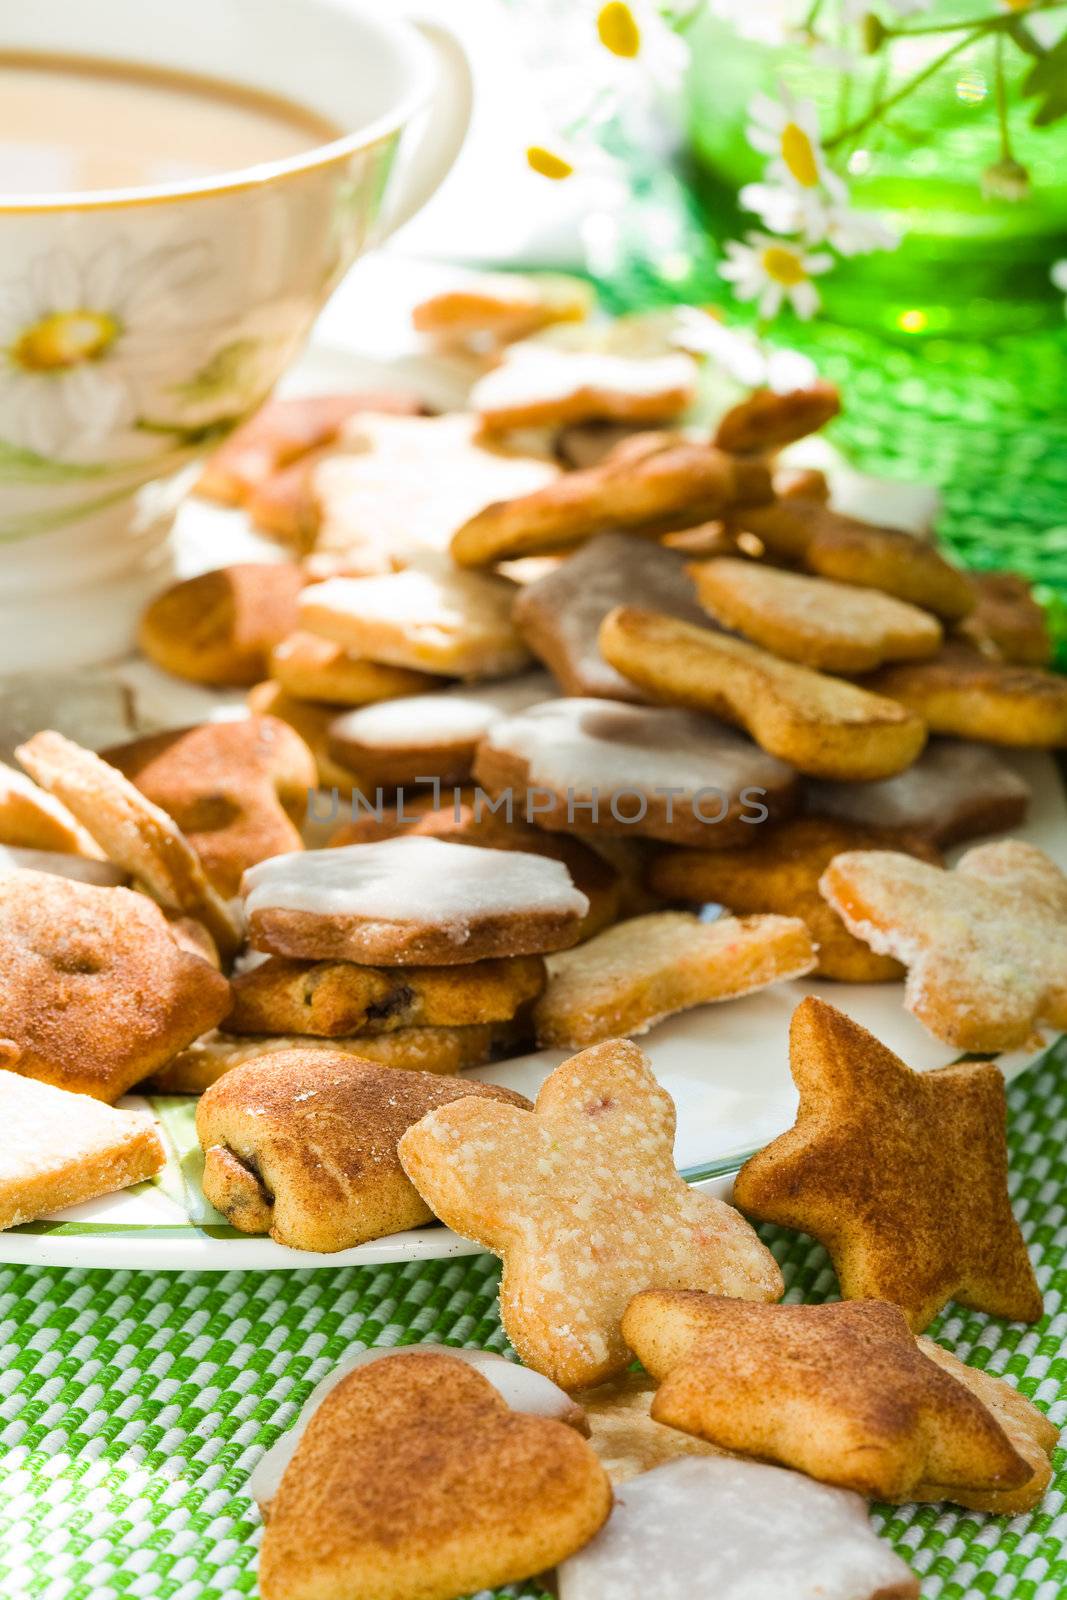 Cookies by Gravicapa